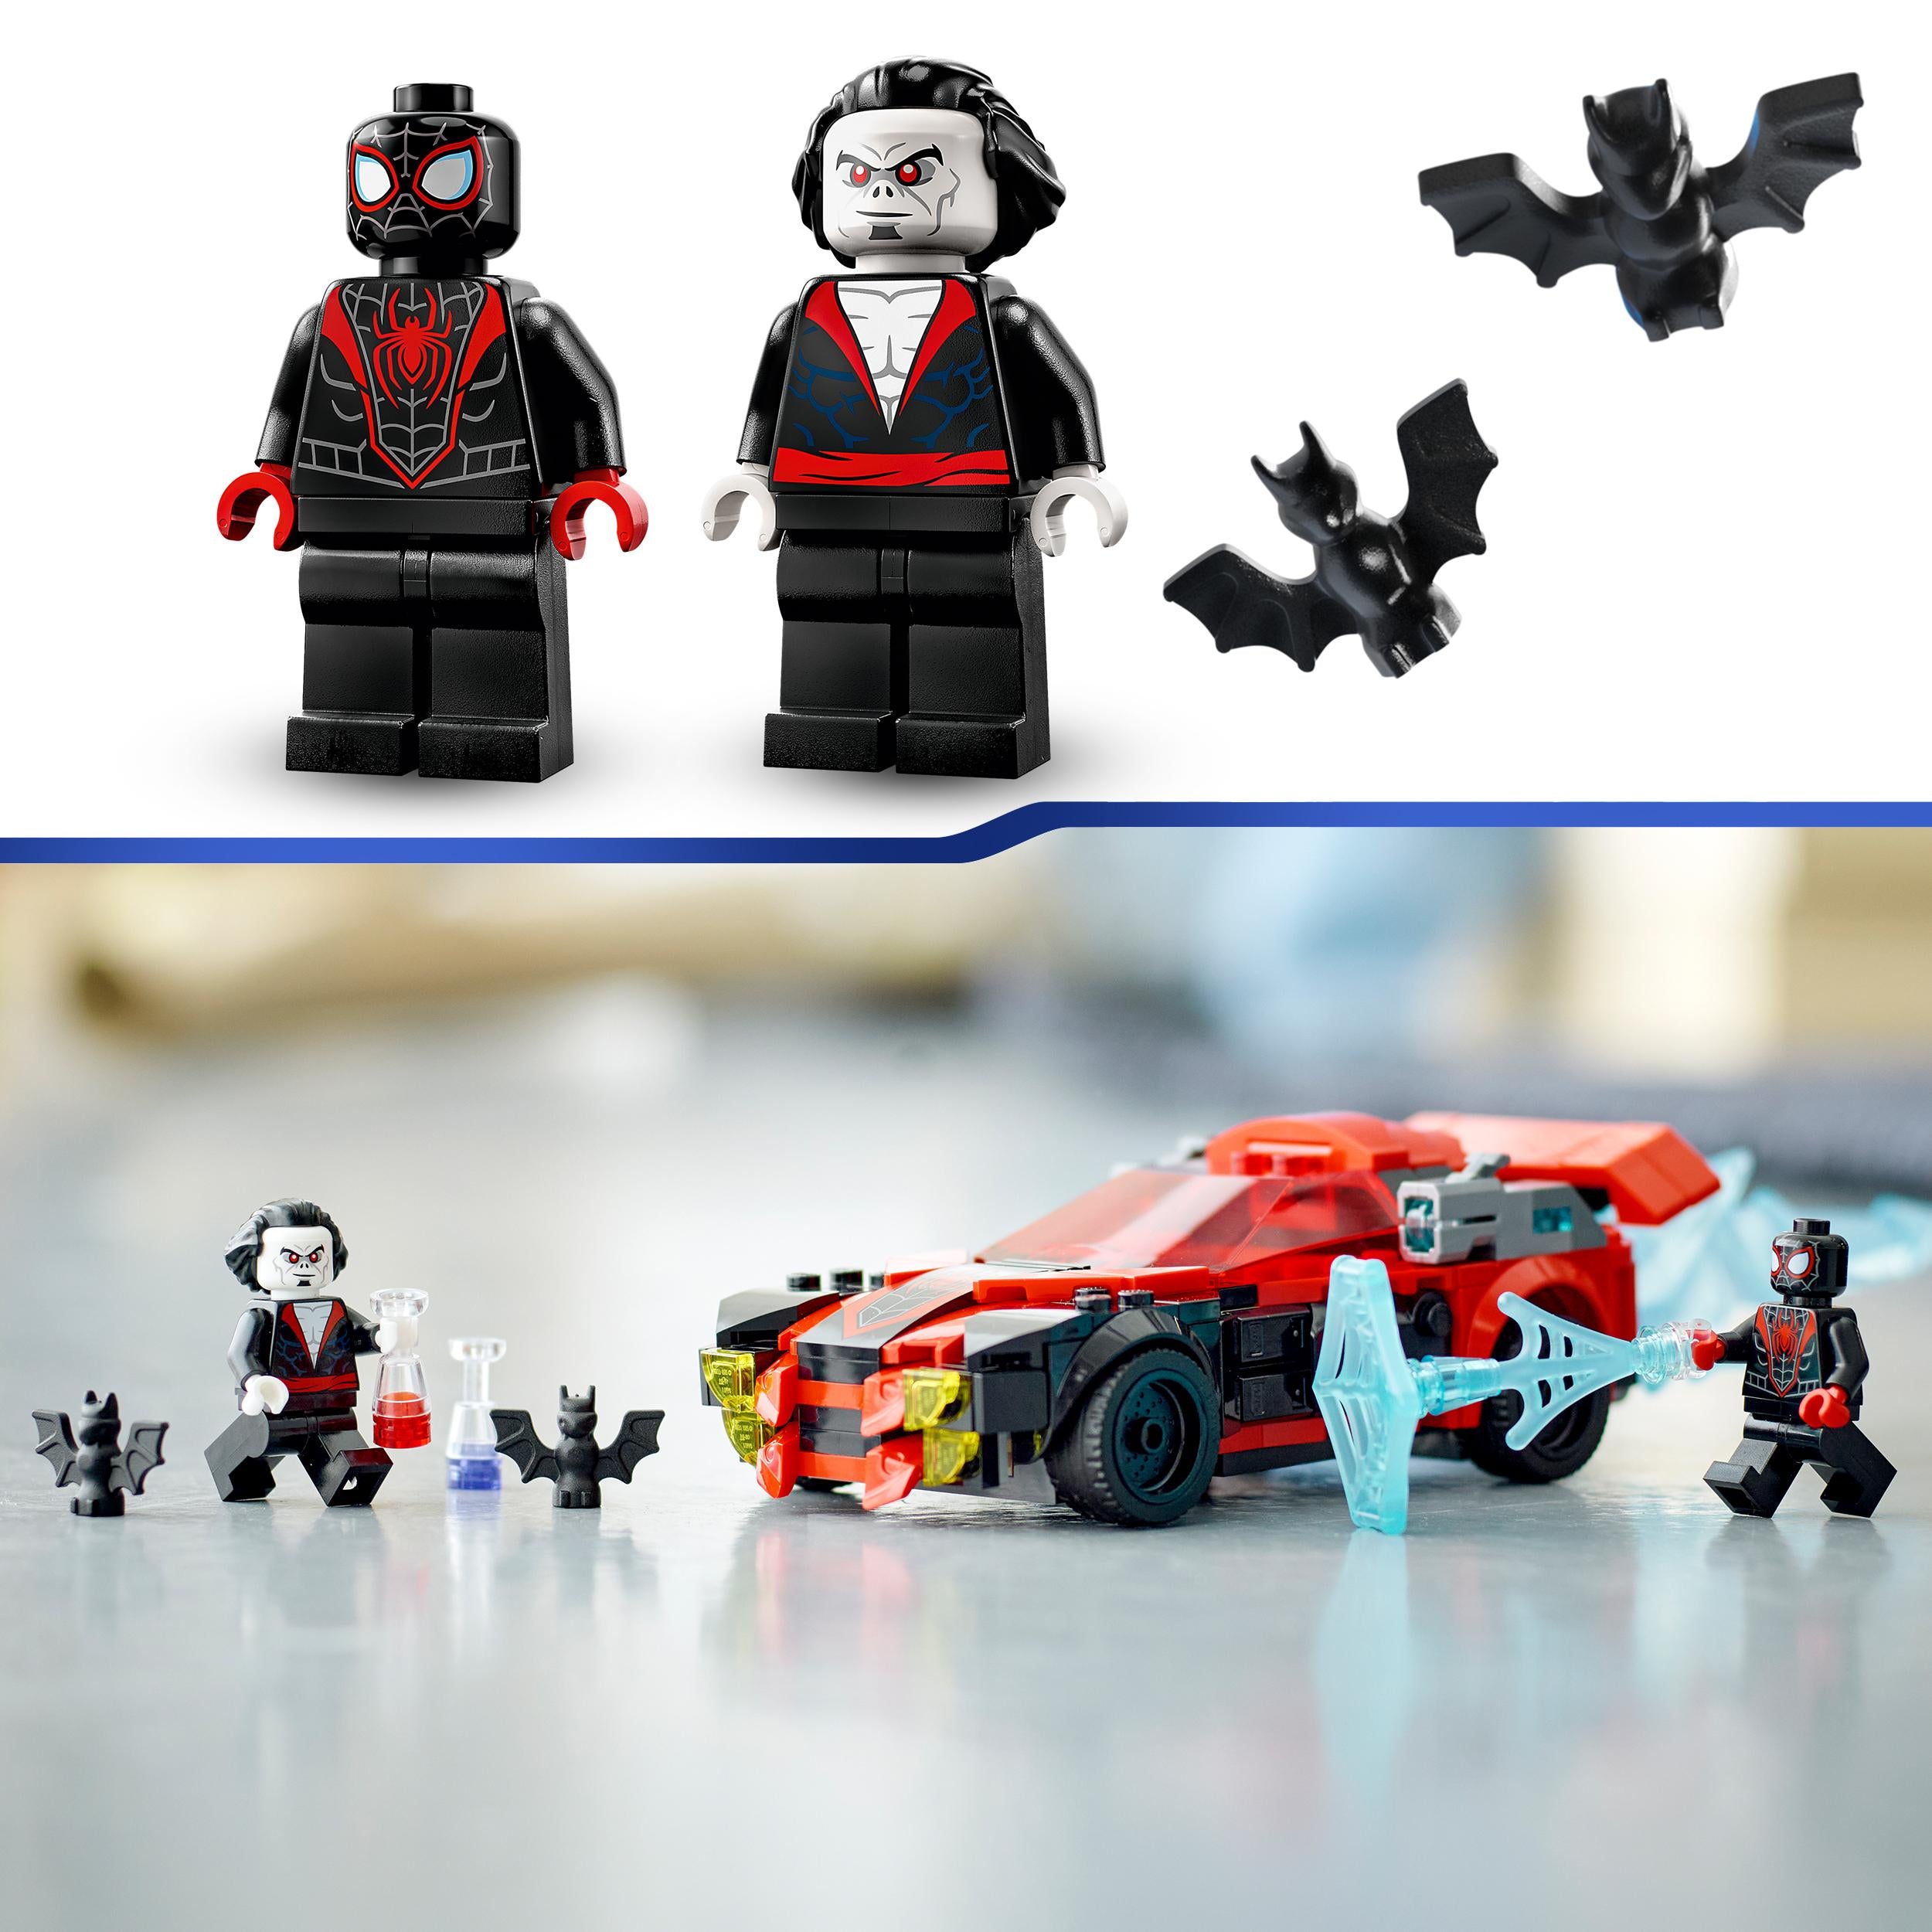 76244 LEGO Super Heroes - Spiderman - Miles Morales contro Morbius